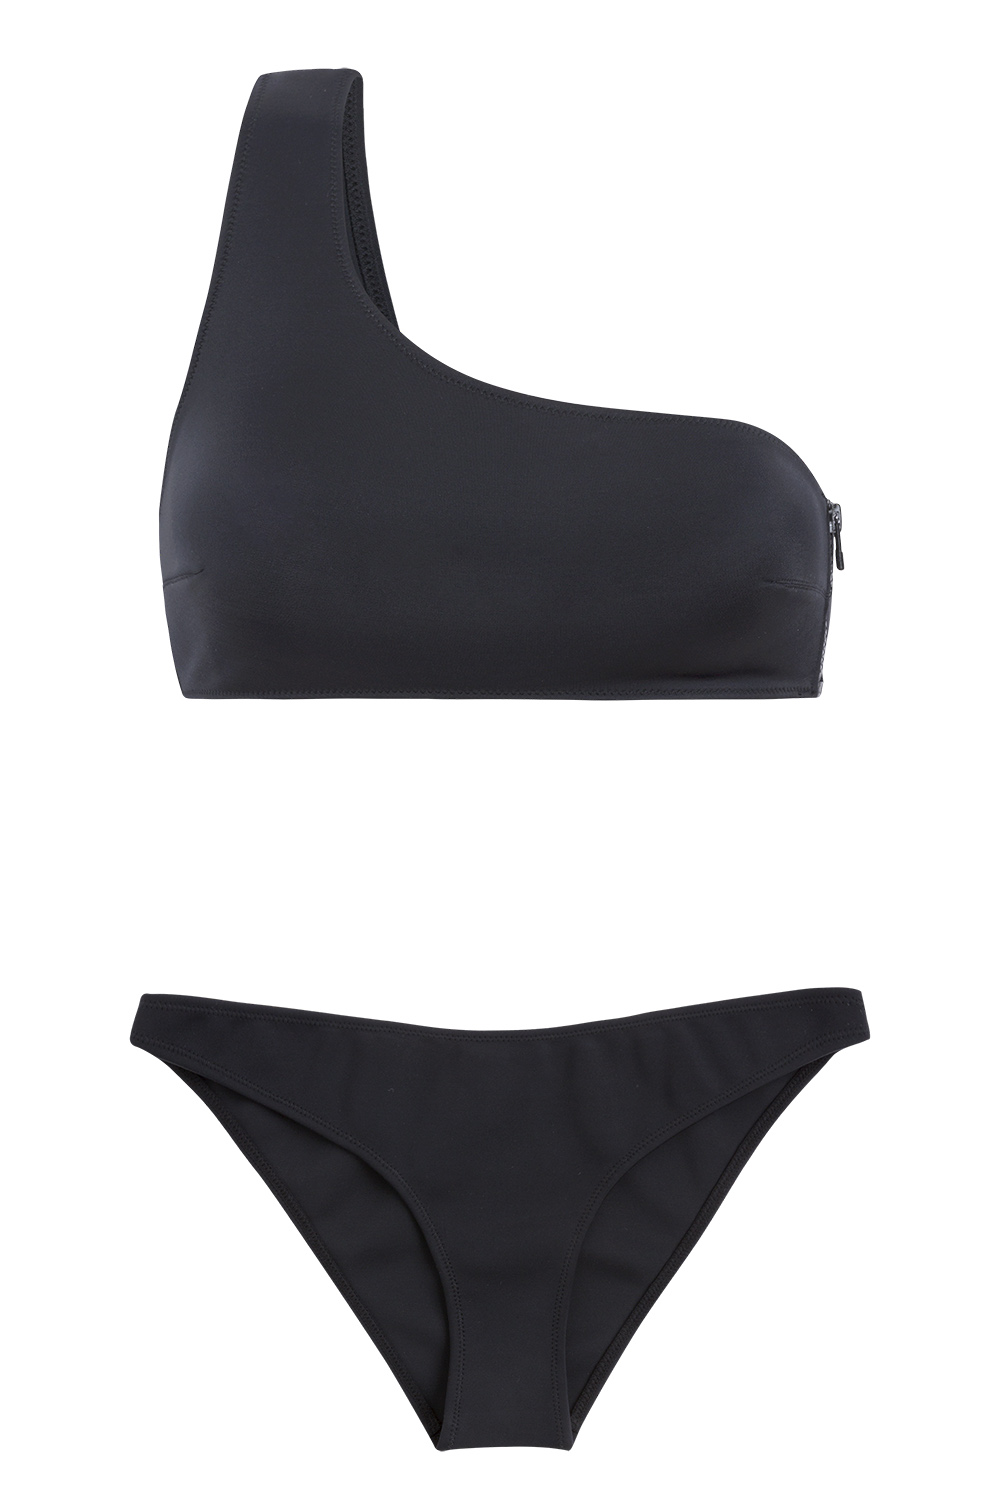 Sustainable Luxury Swimwear / Ropa de baño sostenible, eco bikini / bikini ecológico. Cove + Bantayan in blacksands, by NOW_THEN